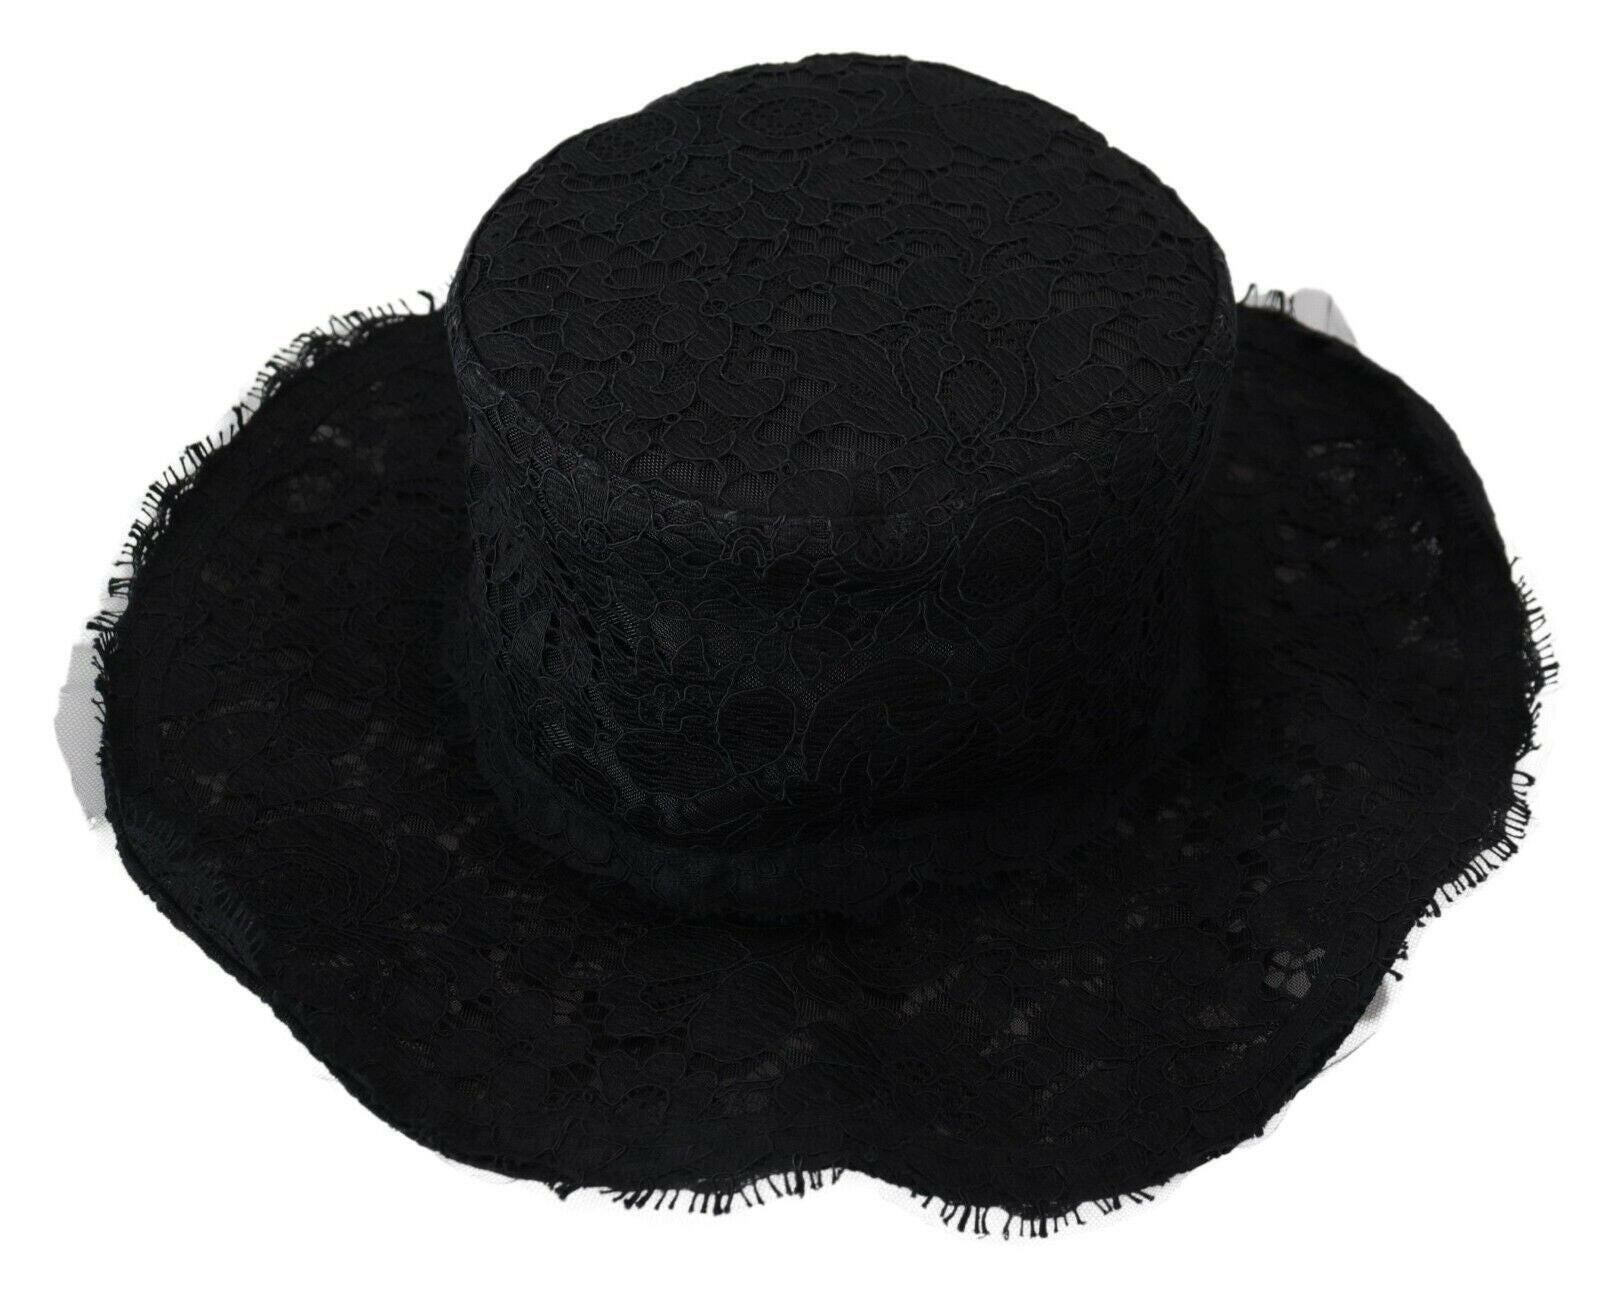 Dolce & Gabbana Black Floral Lace Wide Brim Top Hat - GENUINE AUTHENTIC BRAND LLC  